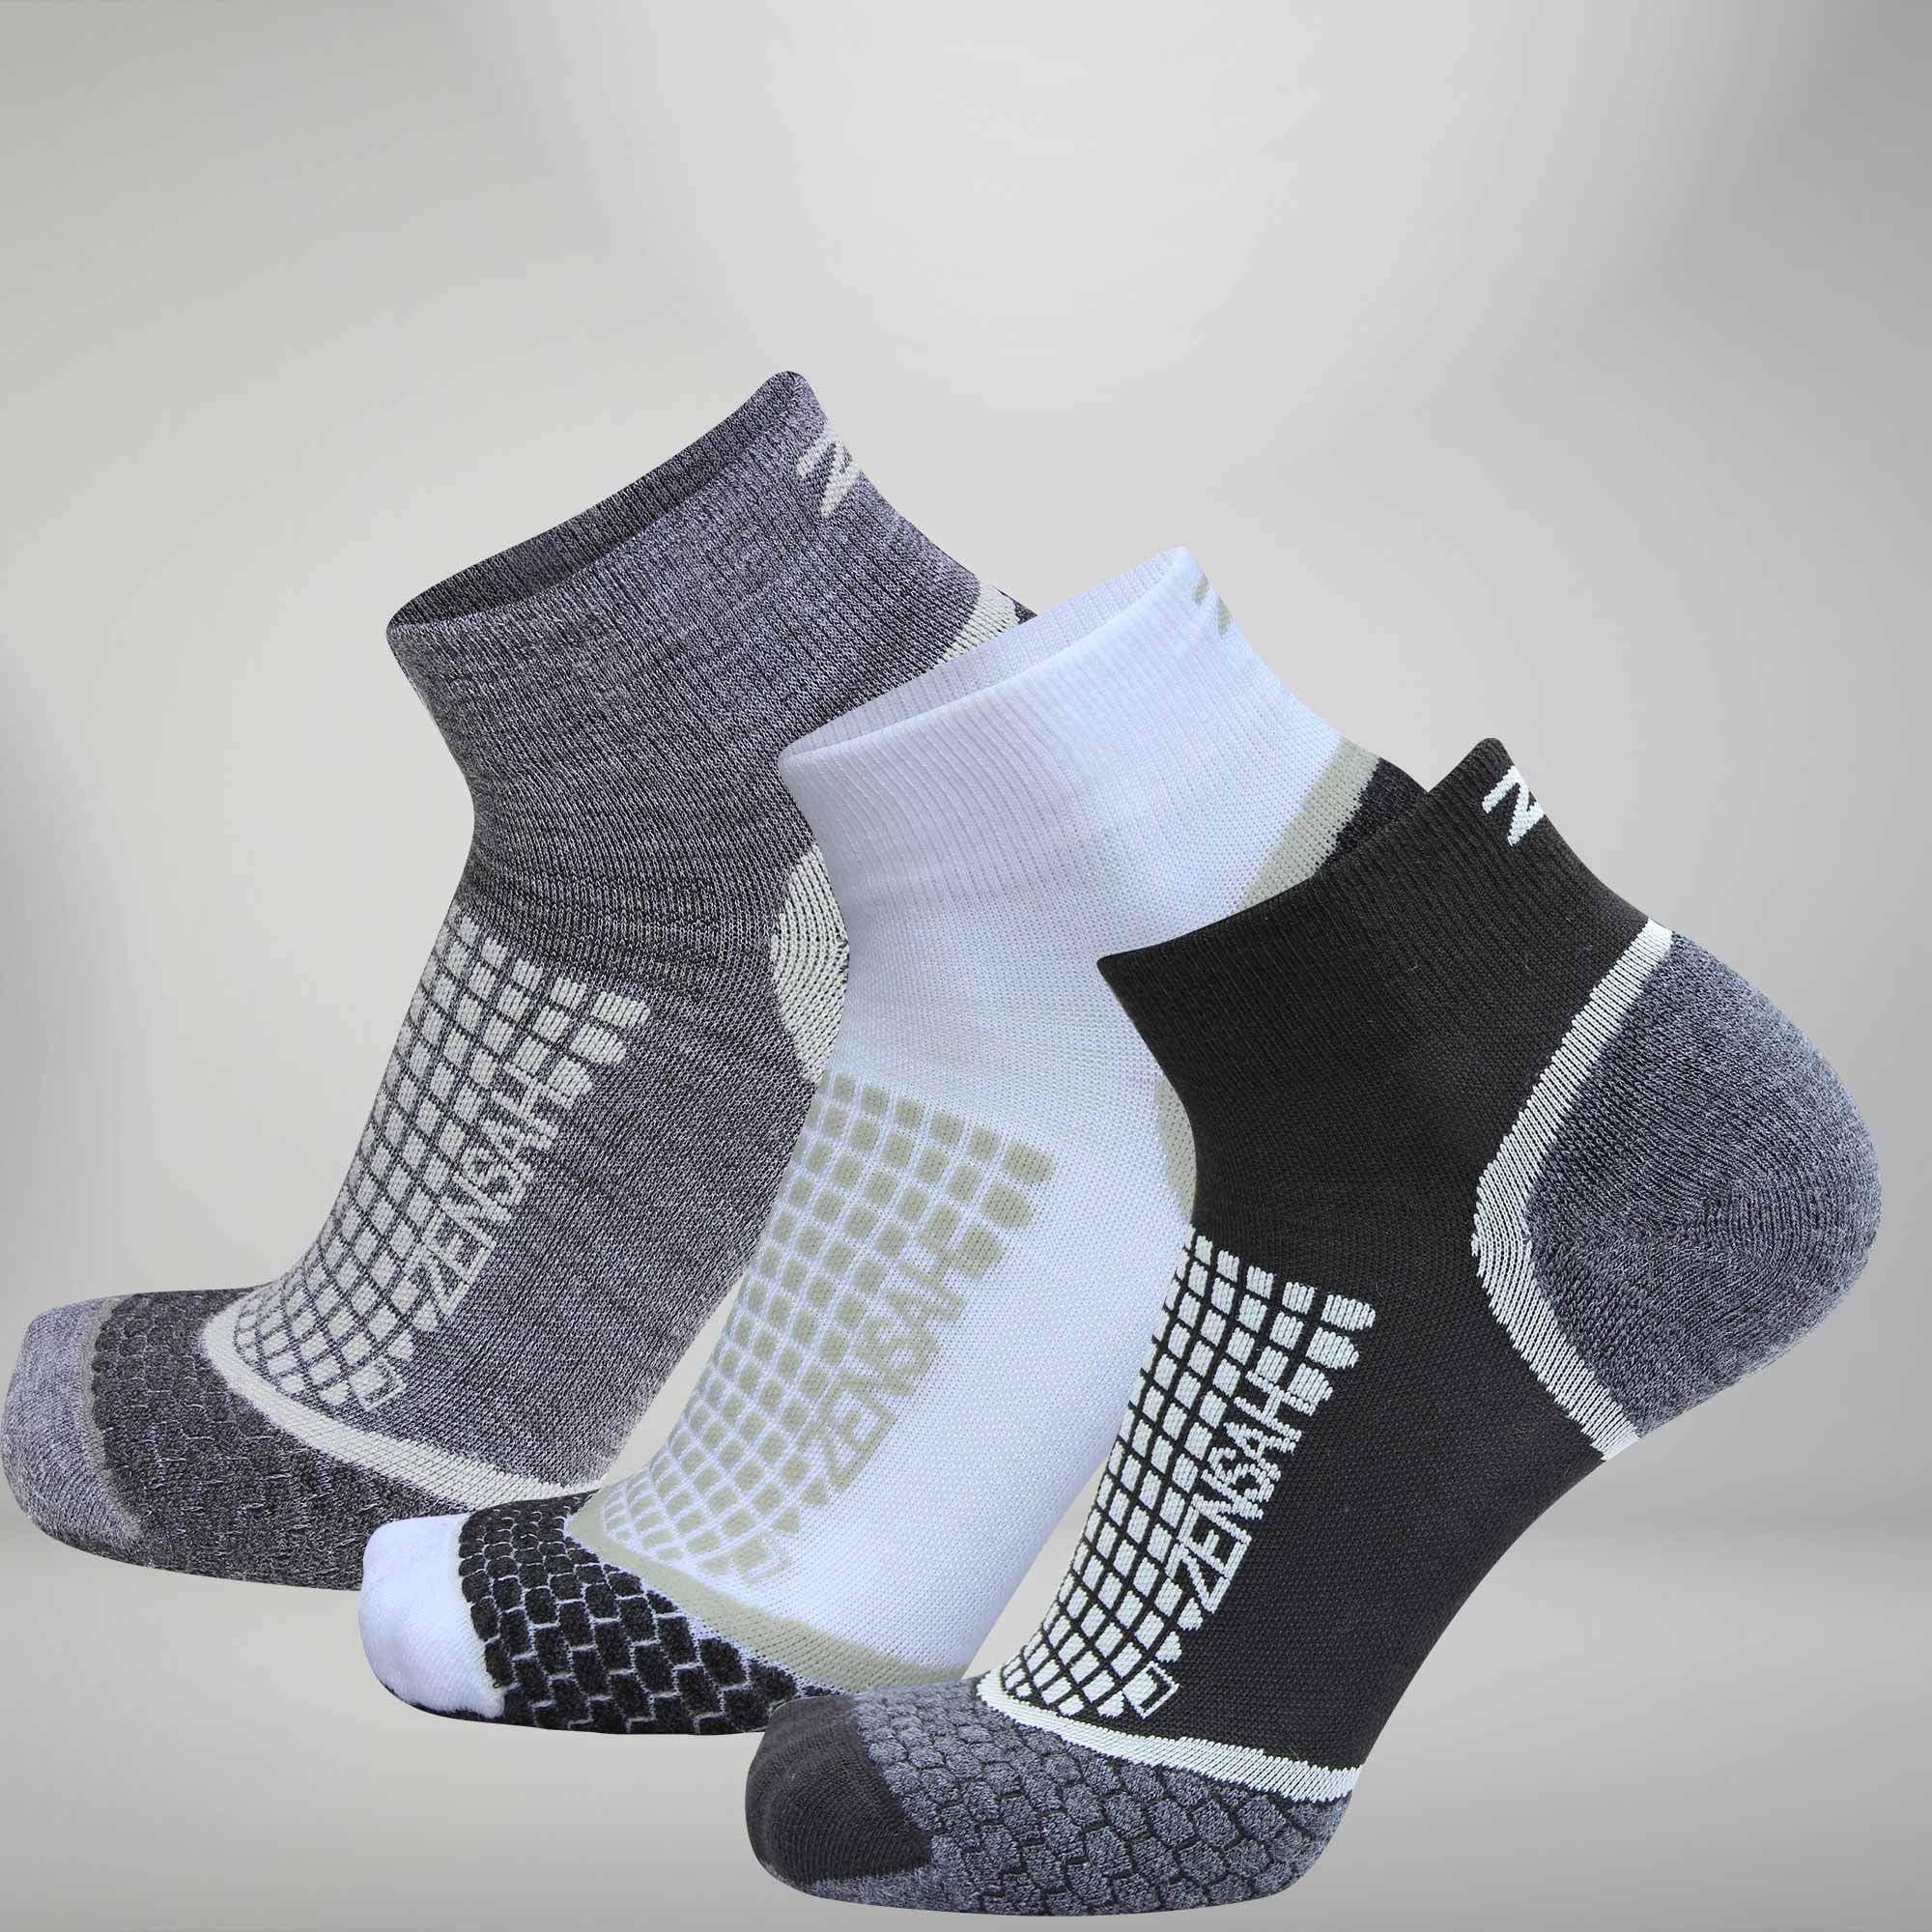 Merino Wool Running Socks - Trail Sport Sock, Wicking | Zensah